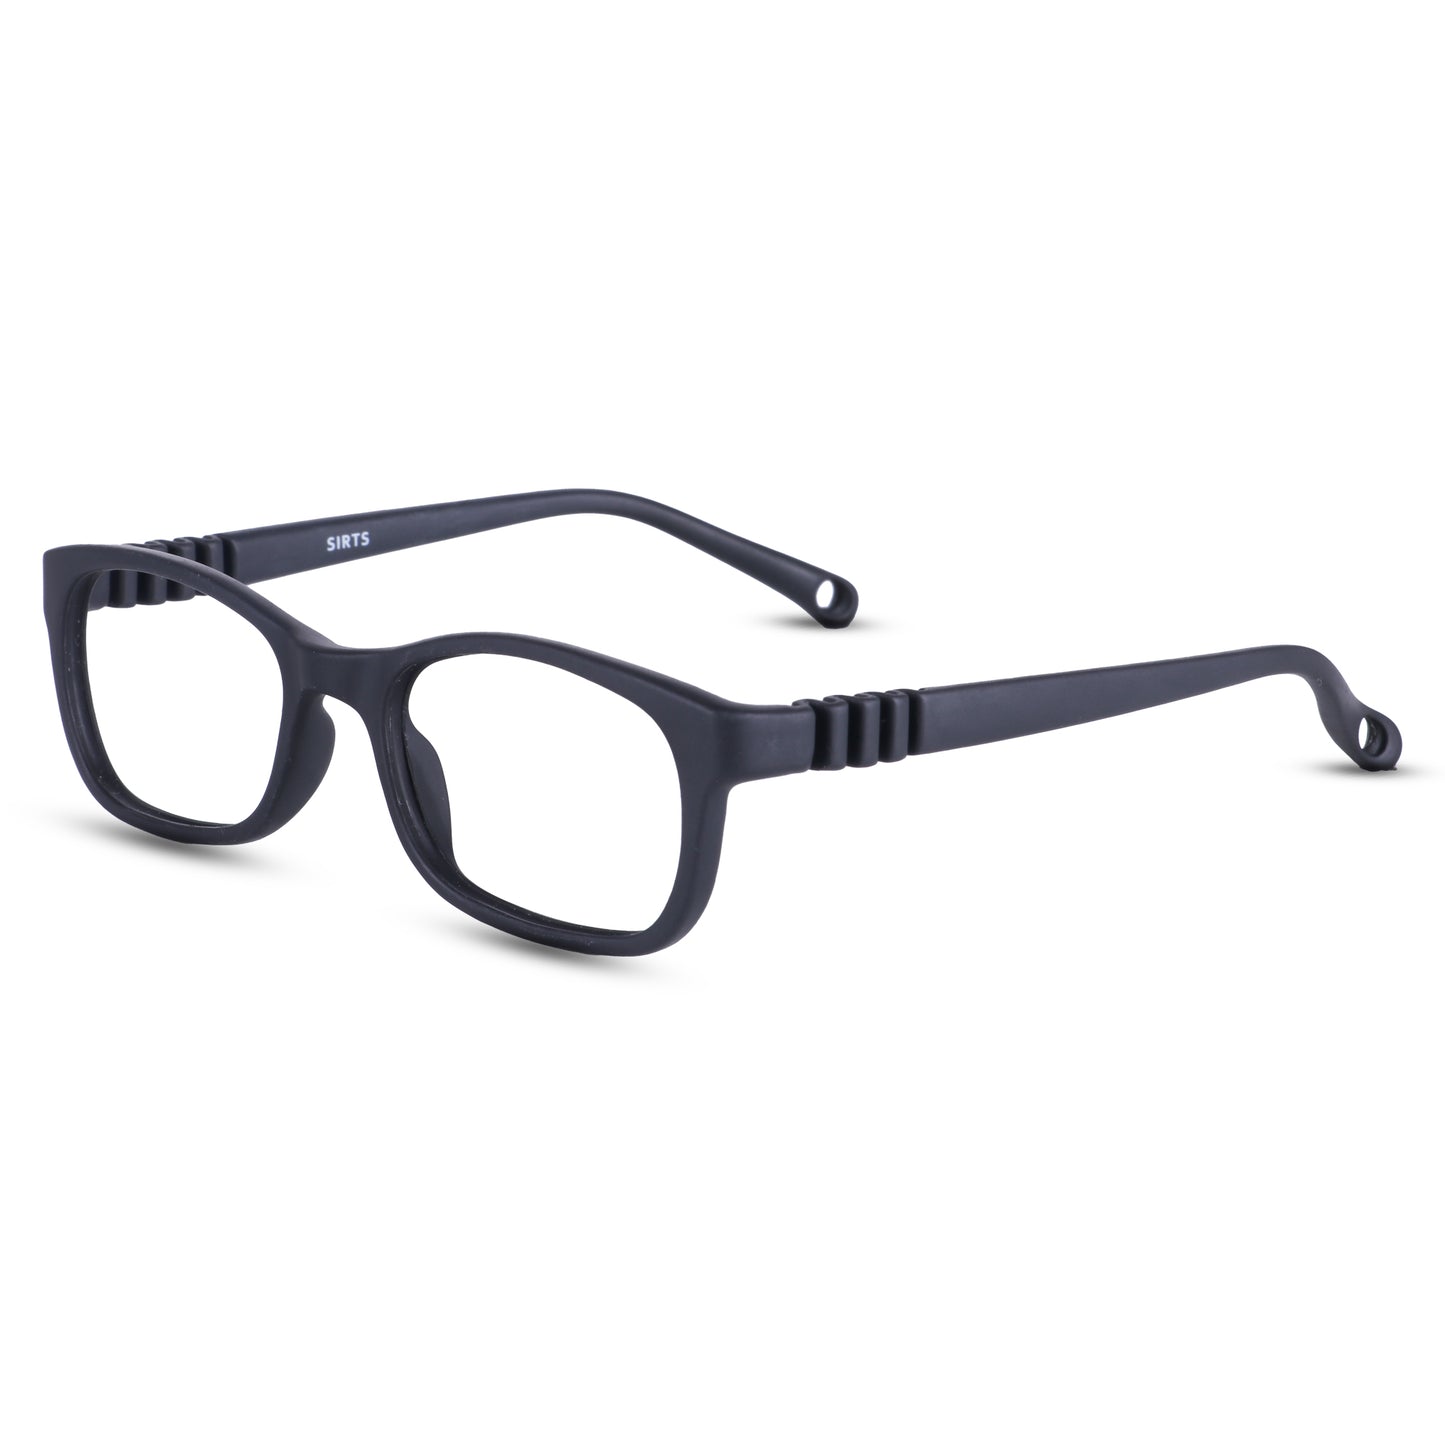 Sirts Computer Glasses Black Oval Eyeglasses